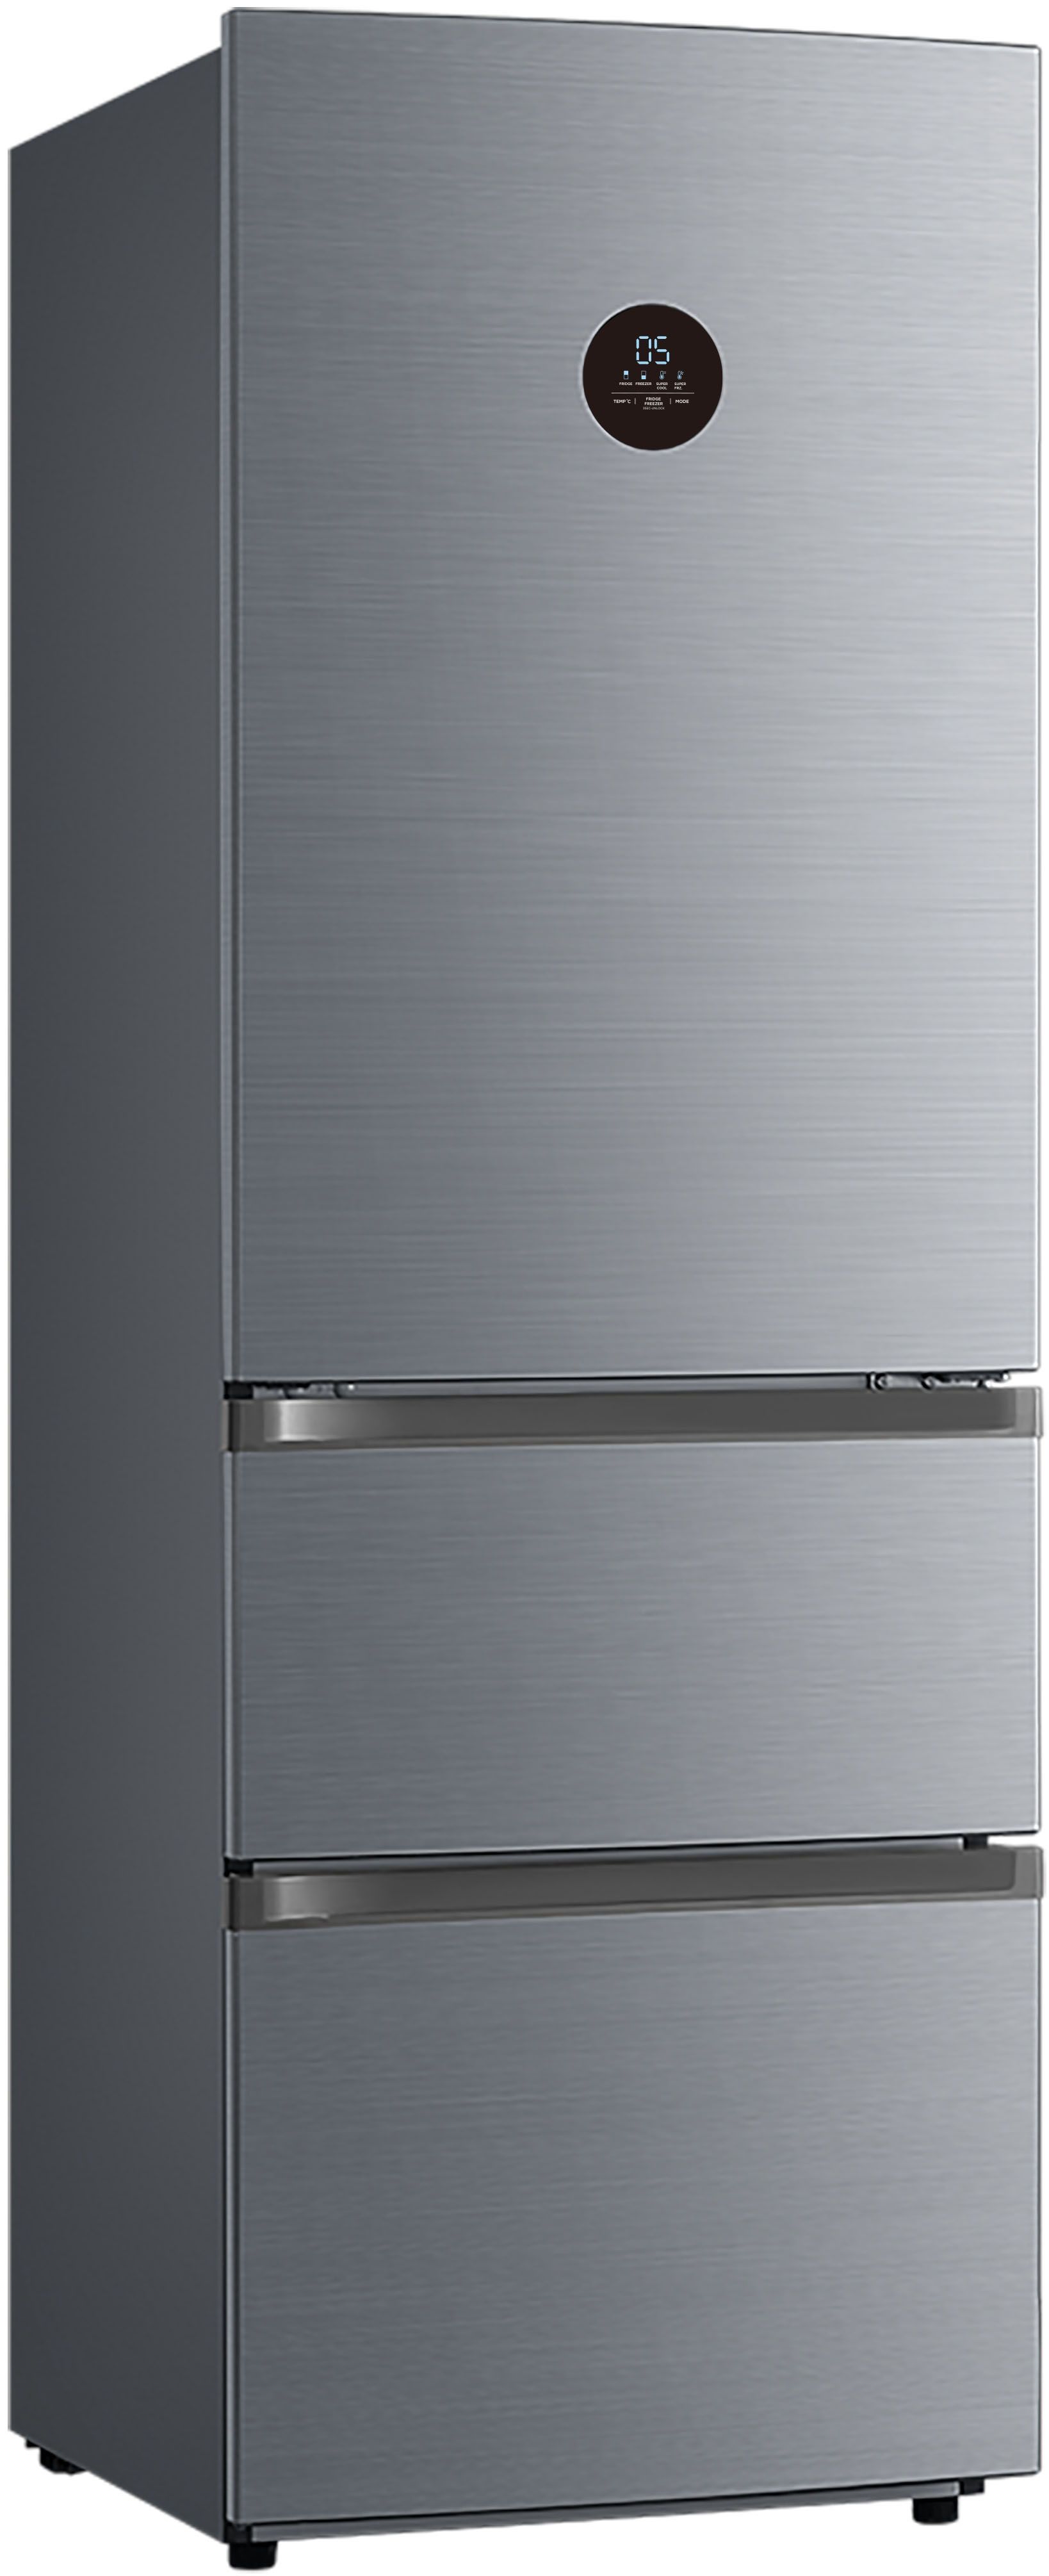 Холодильник Korting KNFF 61889 X серебристый